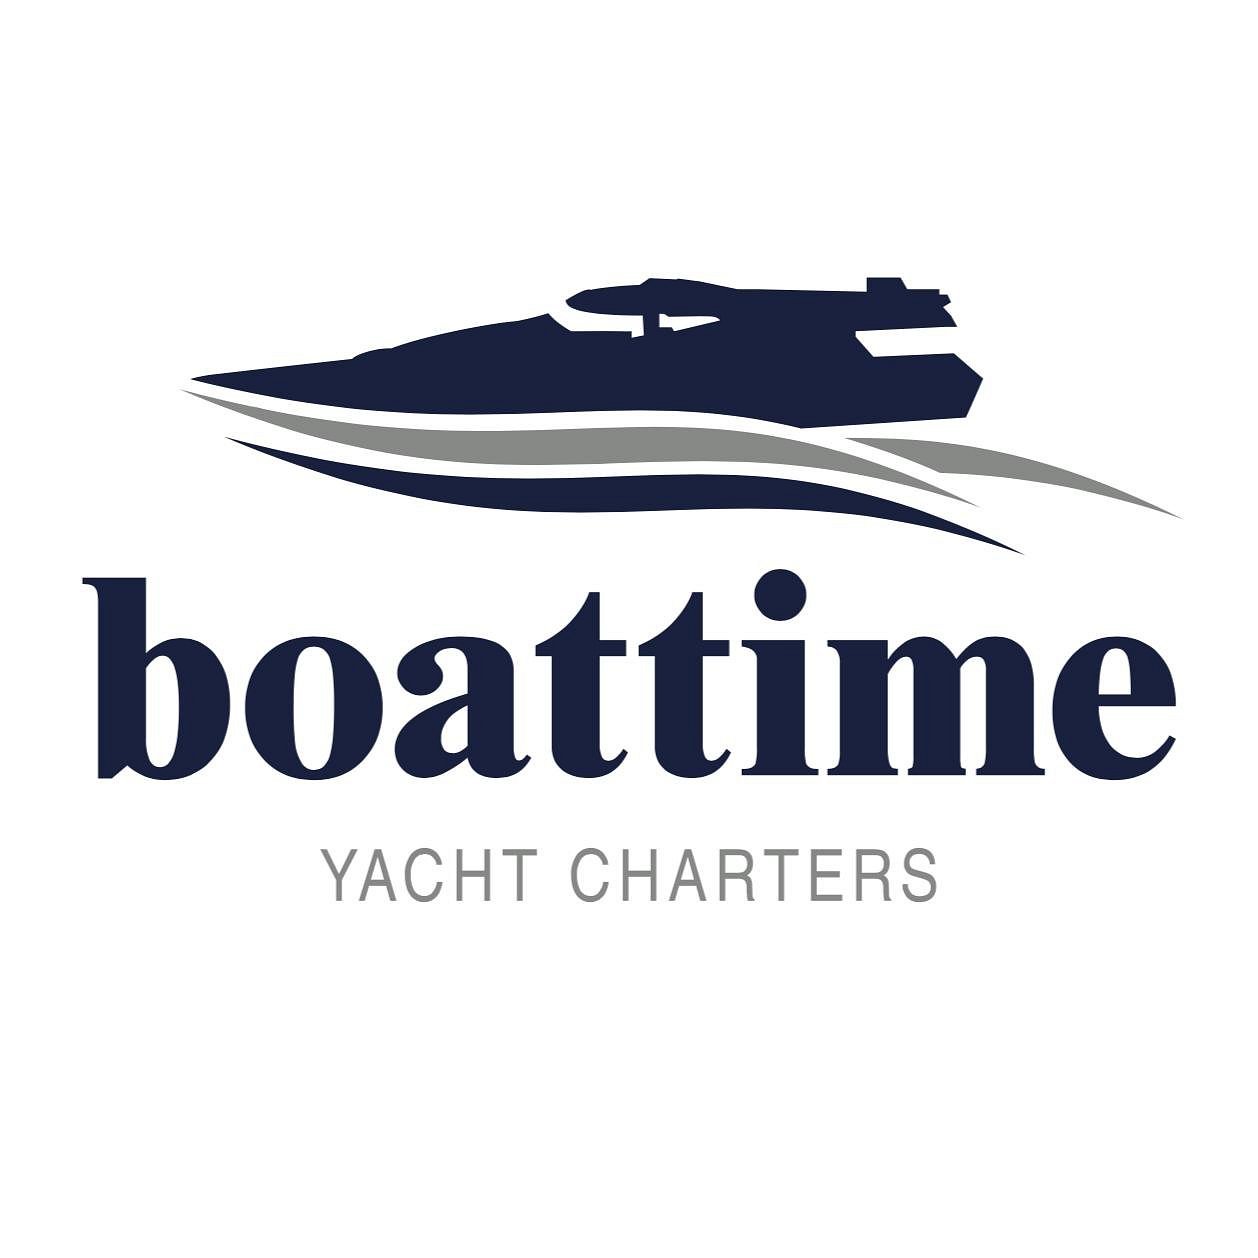 boattime yacht charters reviews